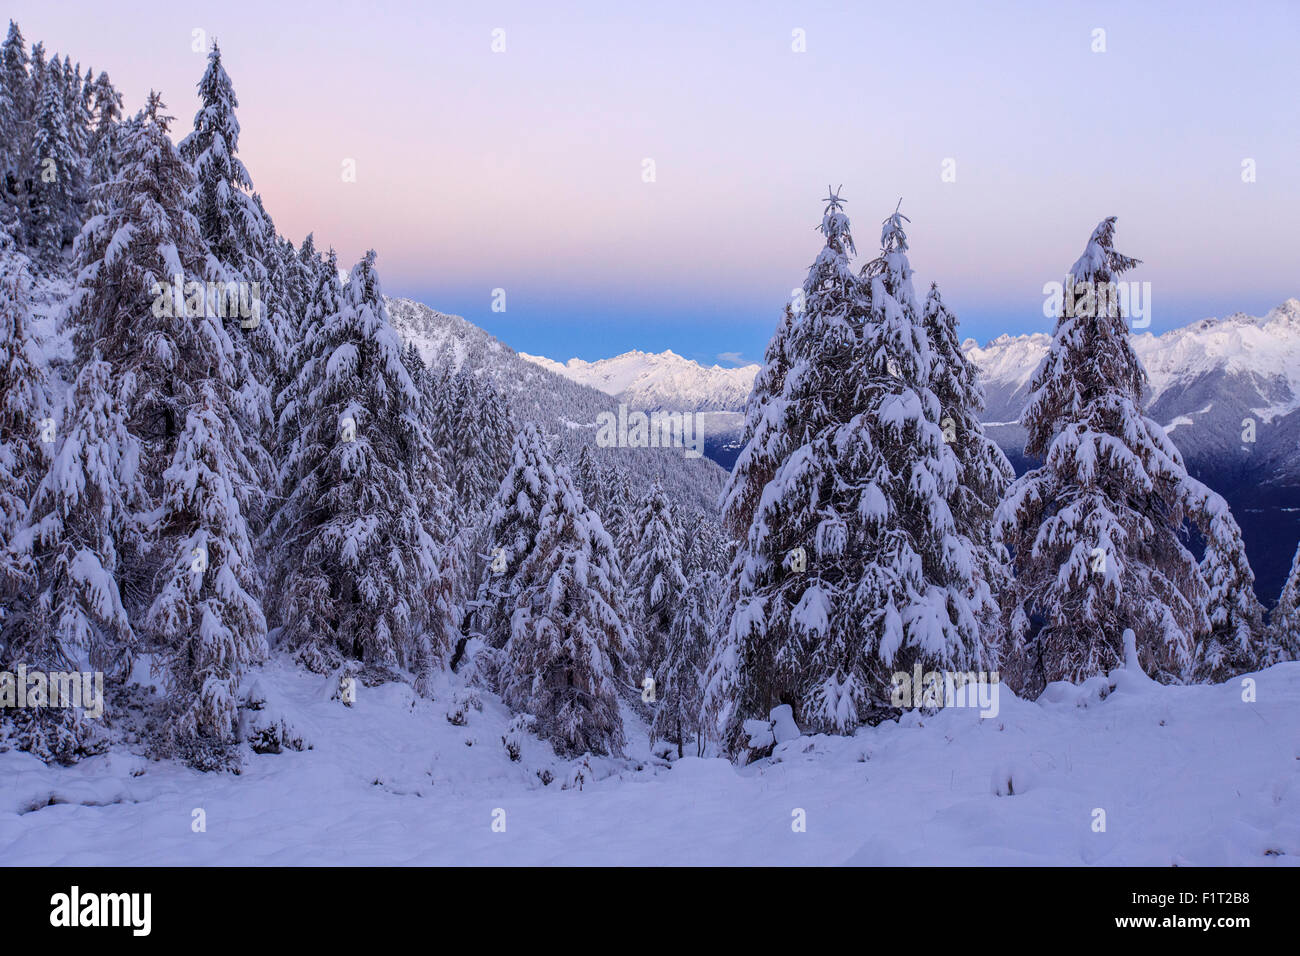 The autumn snowy landscape, Casera Lake, Livrio Valley, Orobie Alps, Valtellina, Lombardy, Italy, Europe Stock Photo